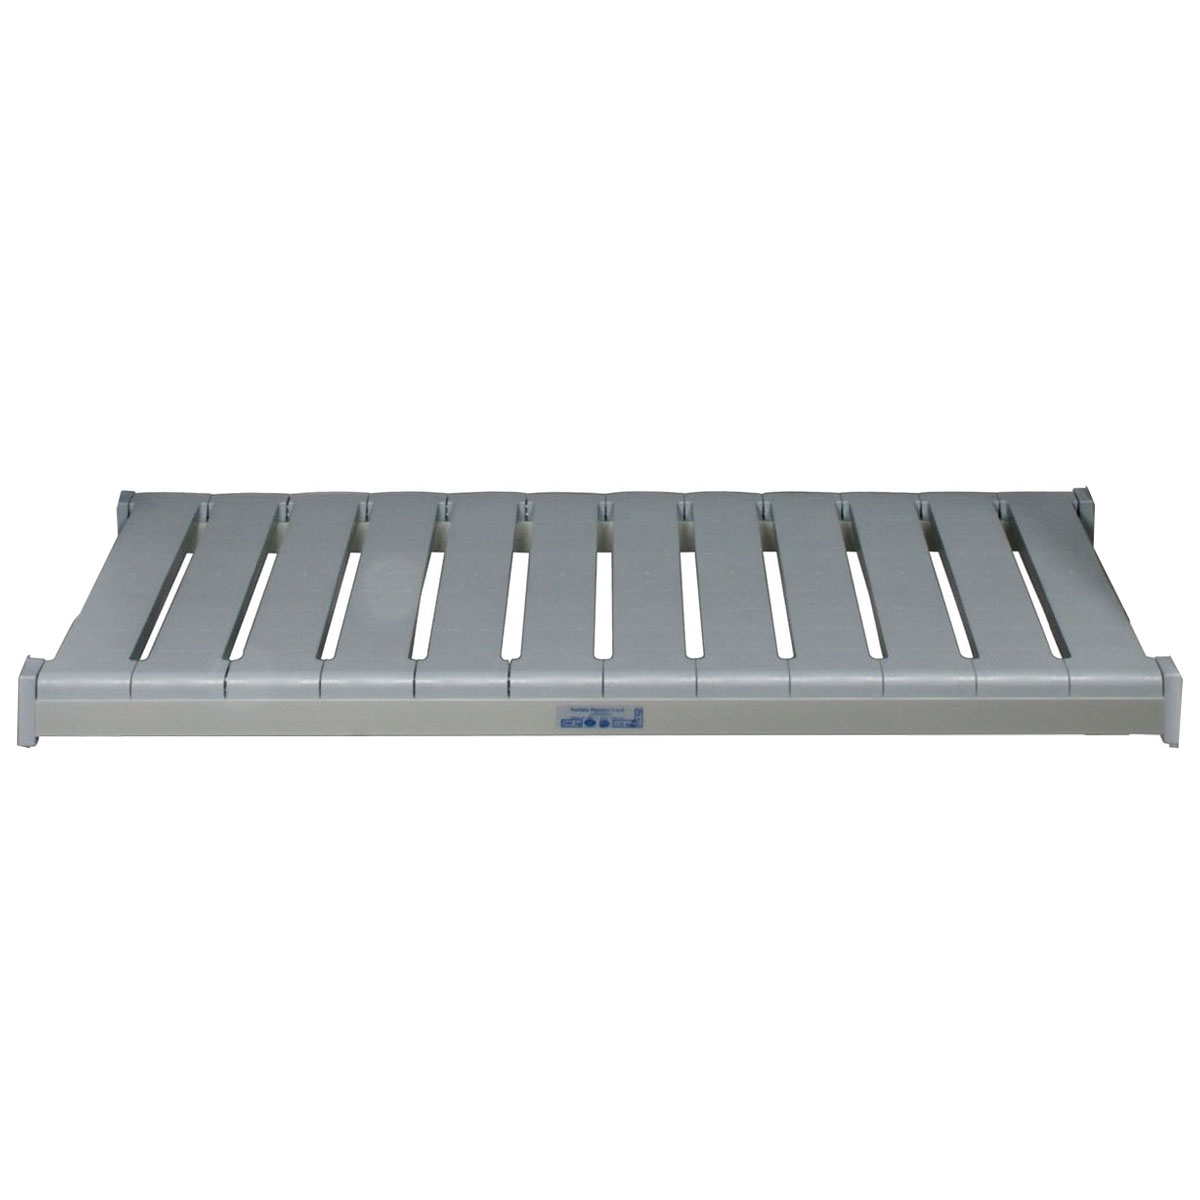 Eko Fit Polymer Range Additional Shelf - W920 x D375mm - KFS454